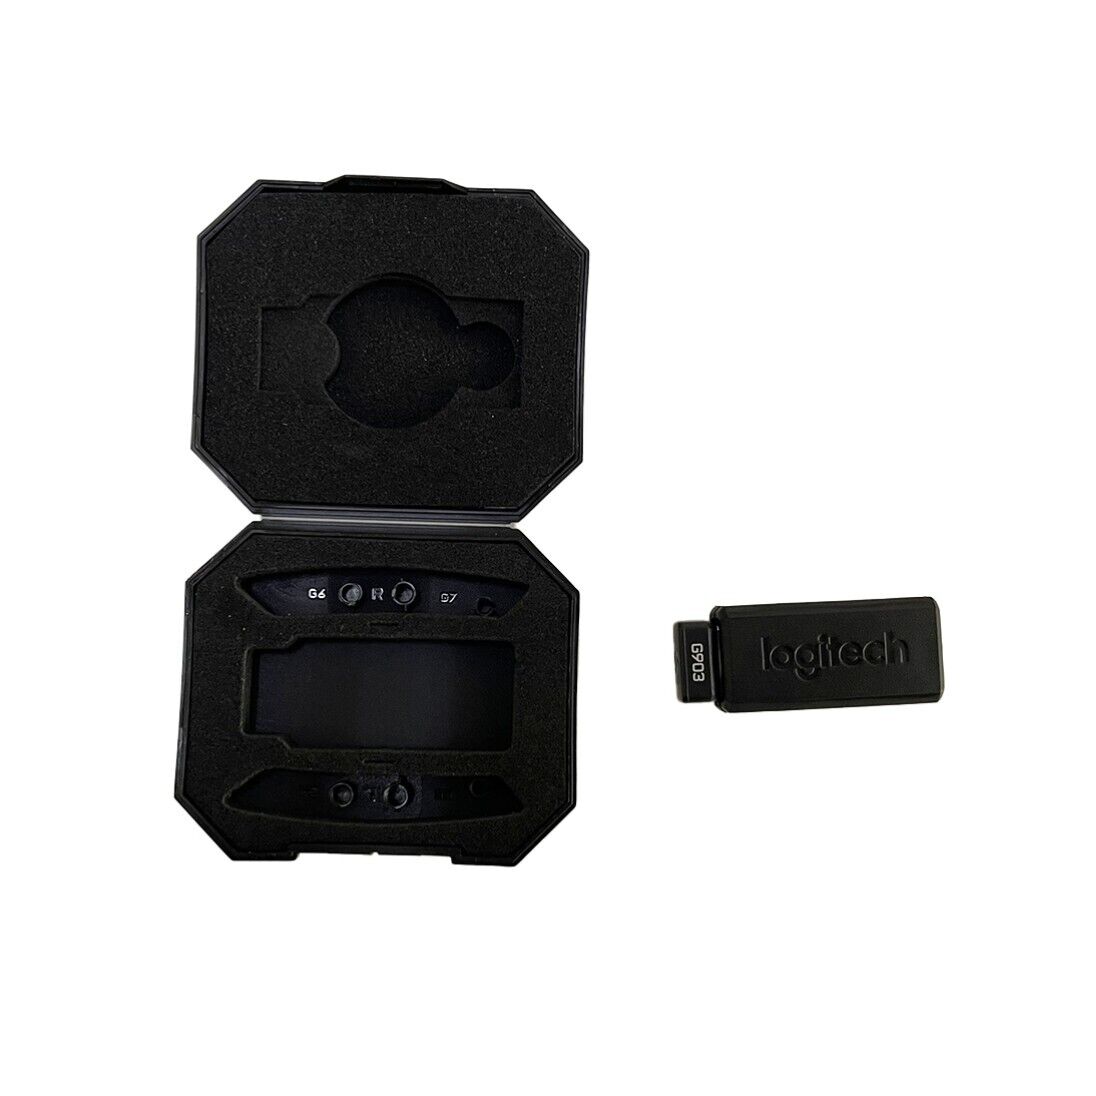 For Logitech G900 G903 G502 G403 USB Receiver Lightspeed Wireless Gaming Mouse